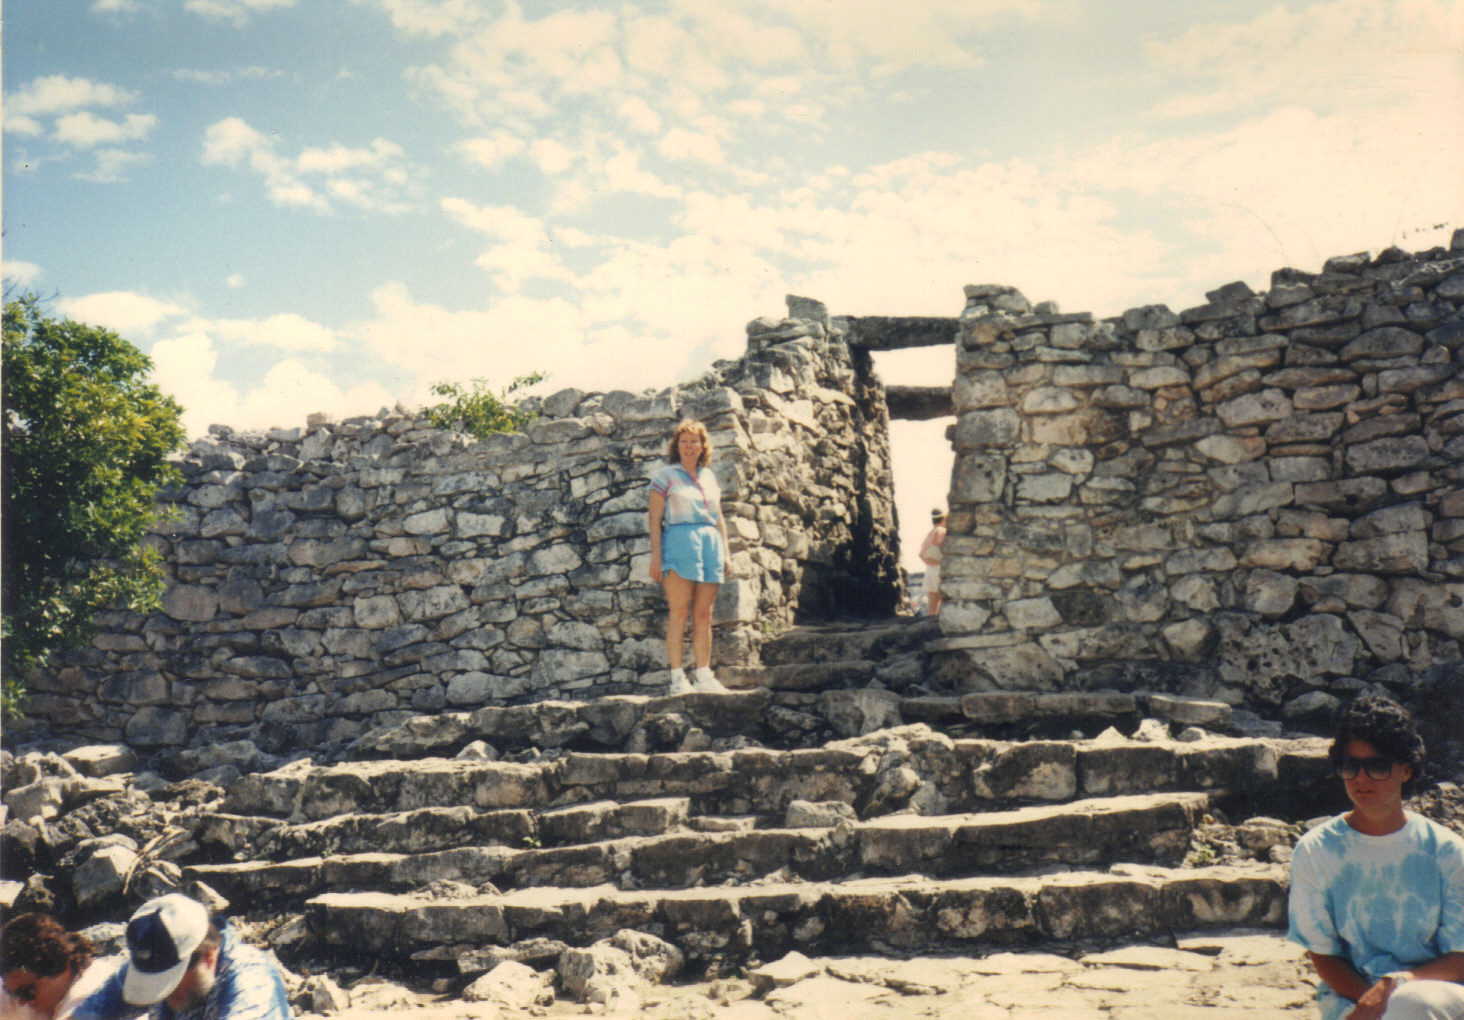 The Mayan Temple in Tulum